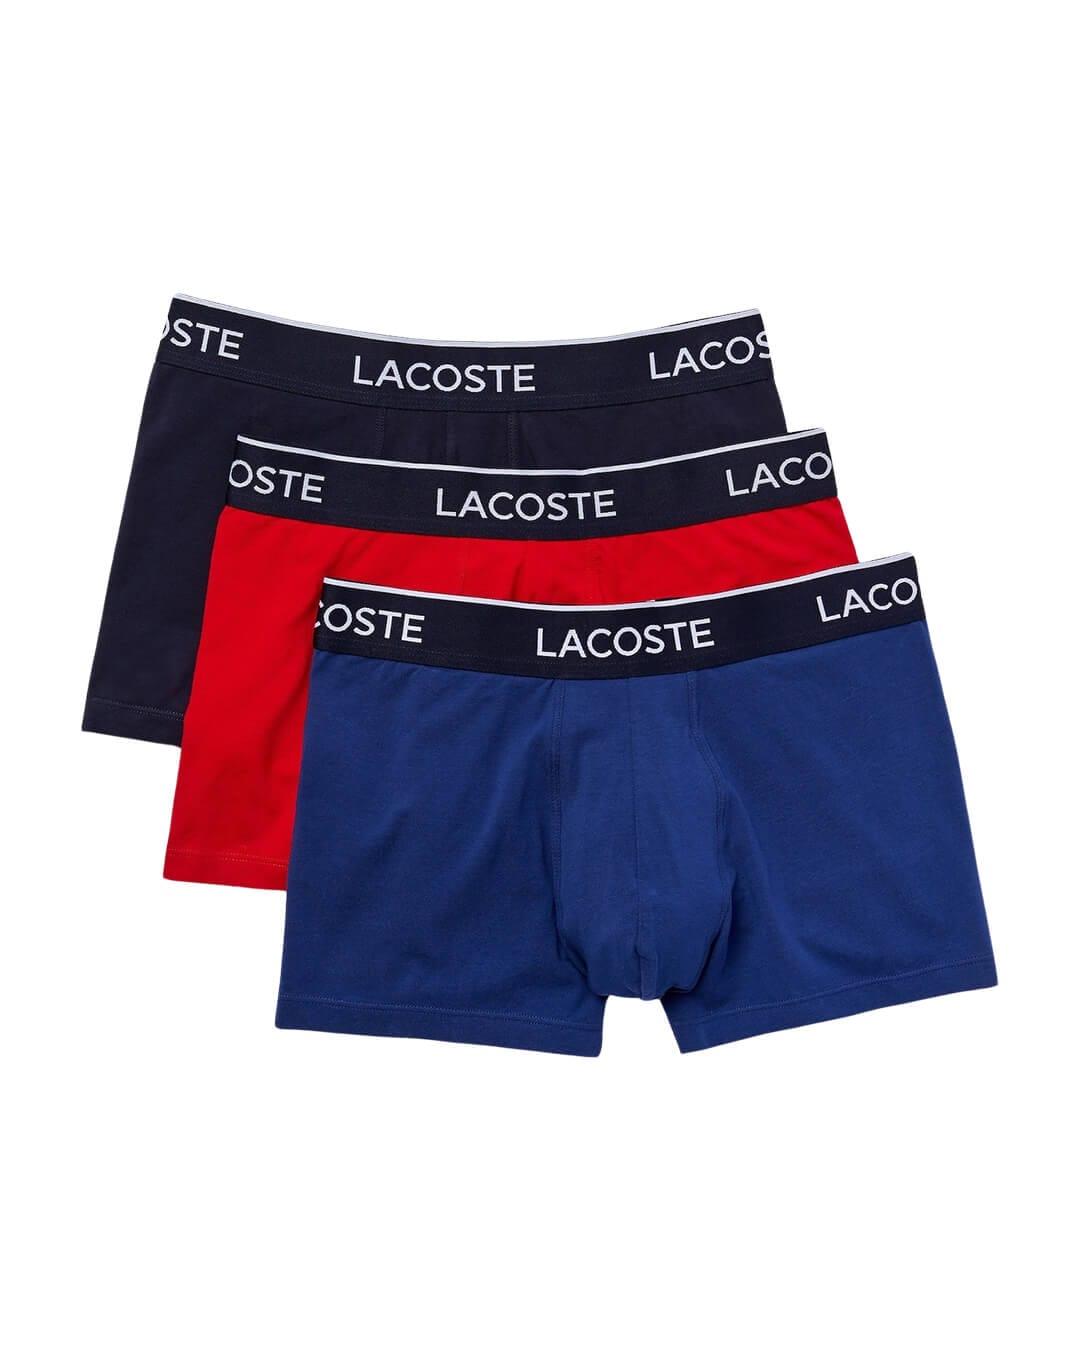 Lacoste Underwear Lacoste Multicoloured Pack Of 3 Casual Black Trunks